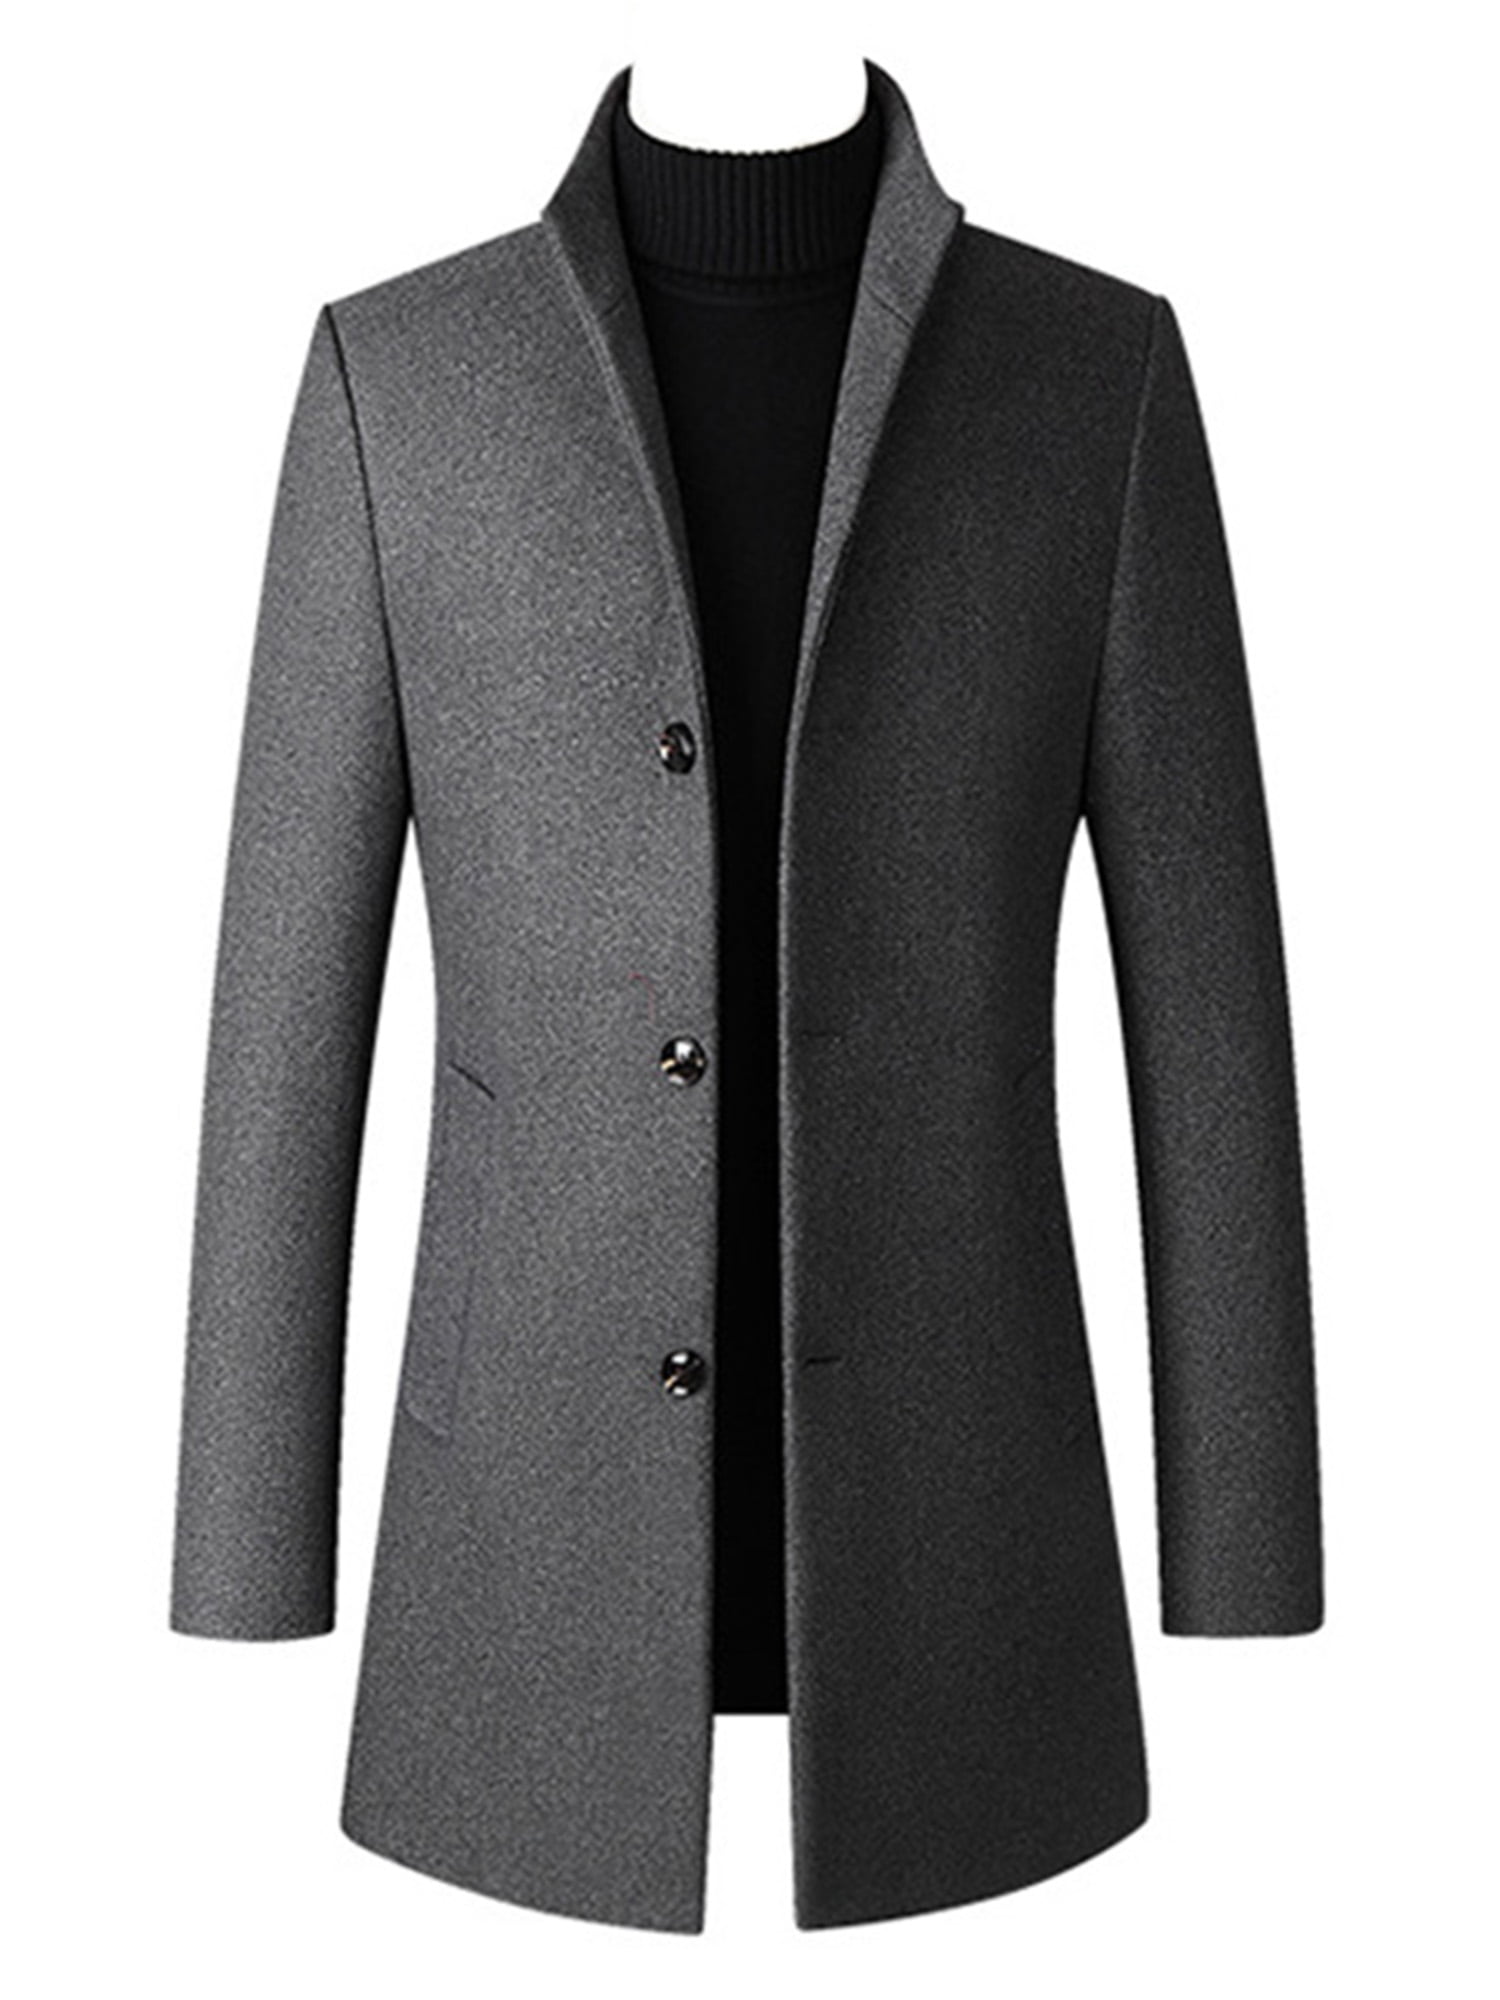 DressU Mens Thickening Cotton Mid Length Solid Hood Pea Coat Jacket